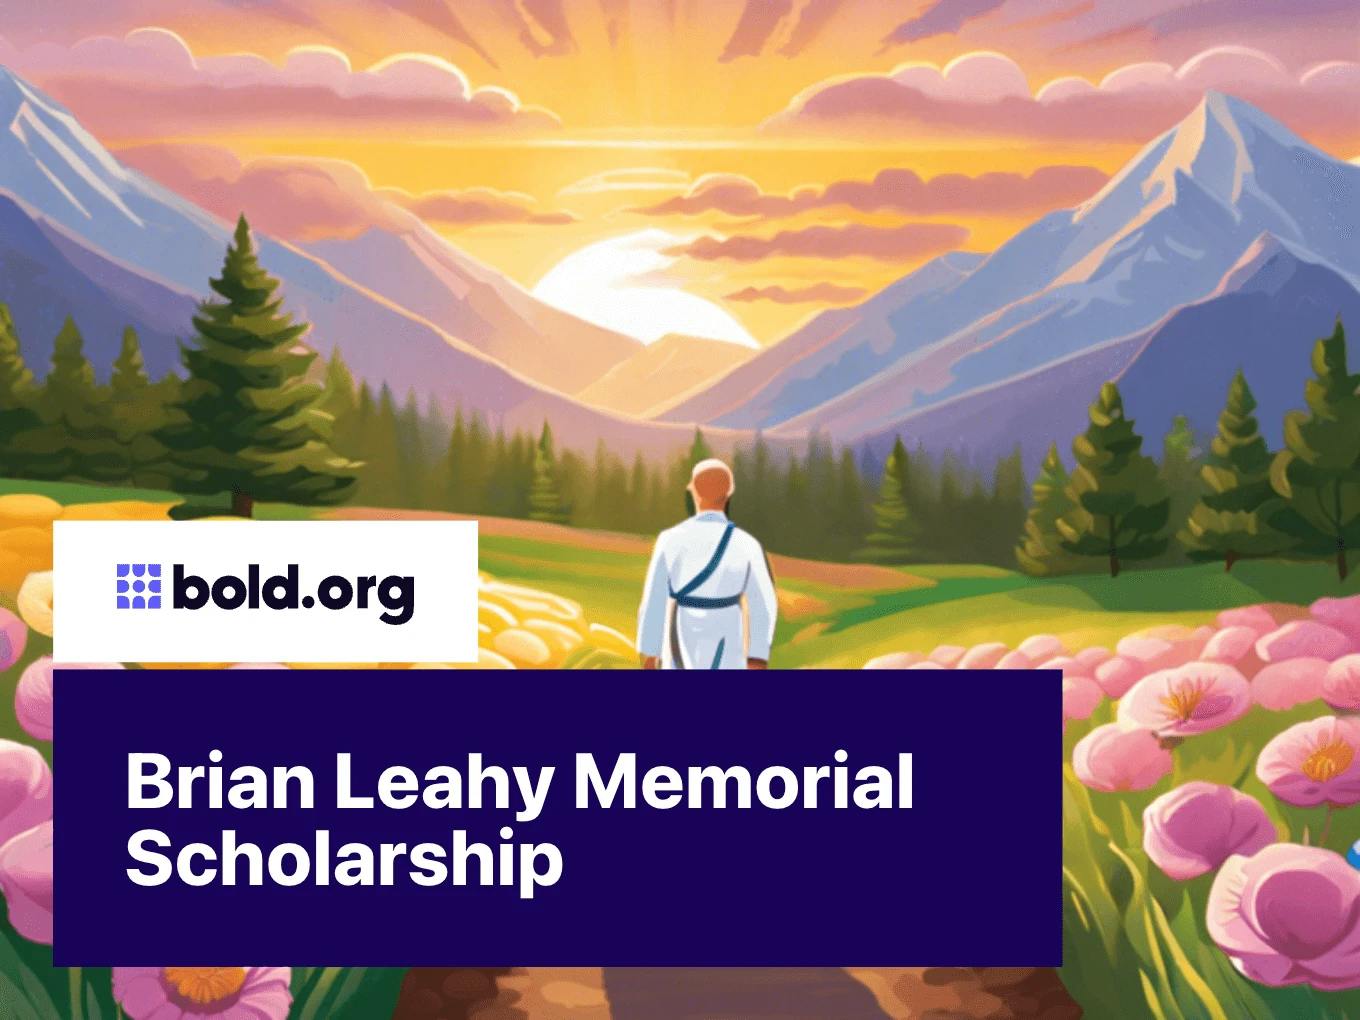 Brian Leahy Memorial Scholarship